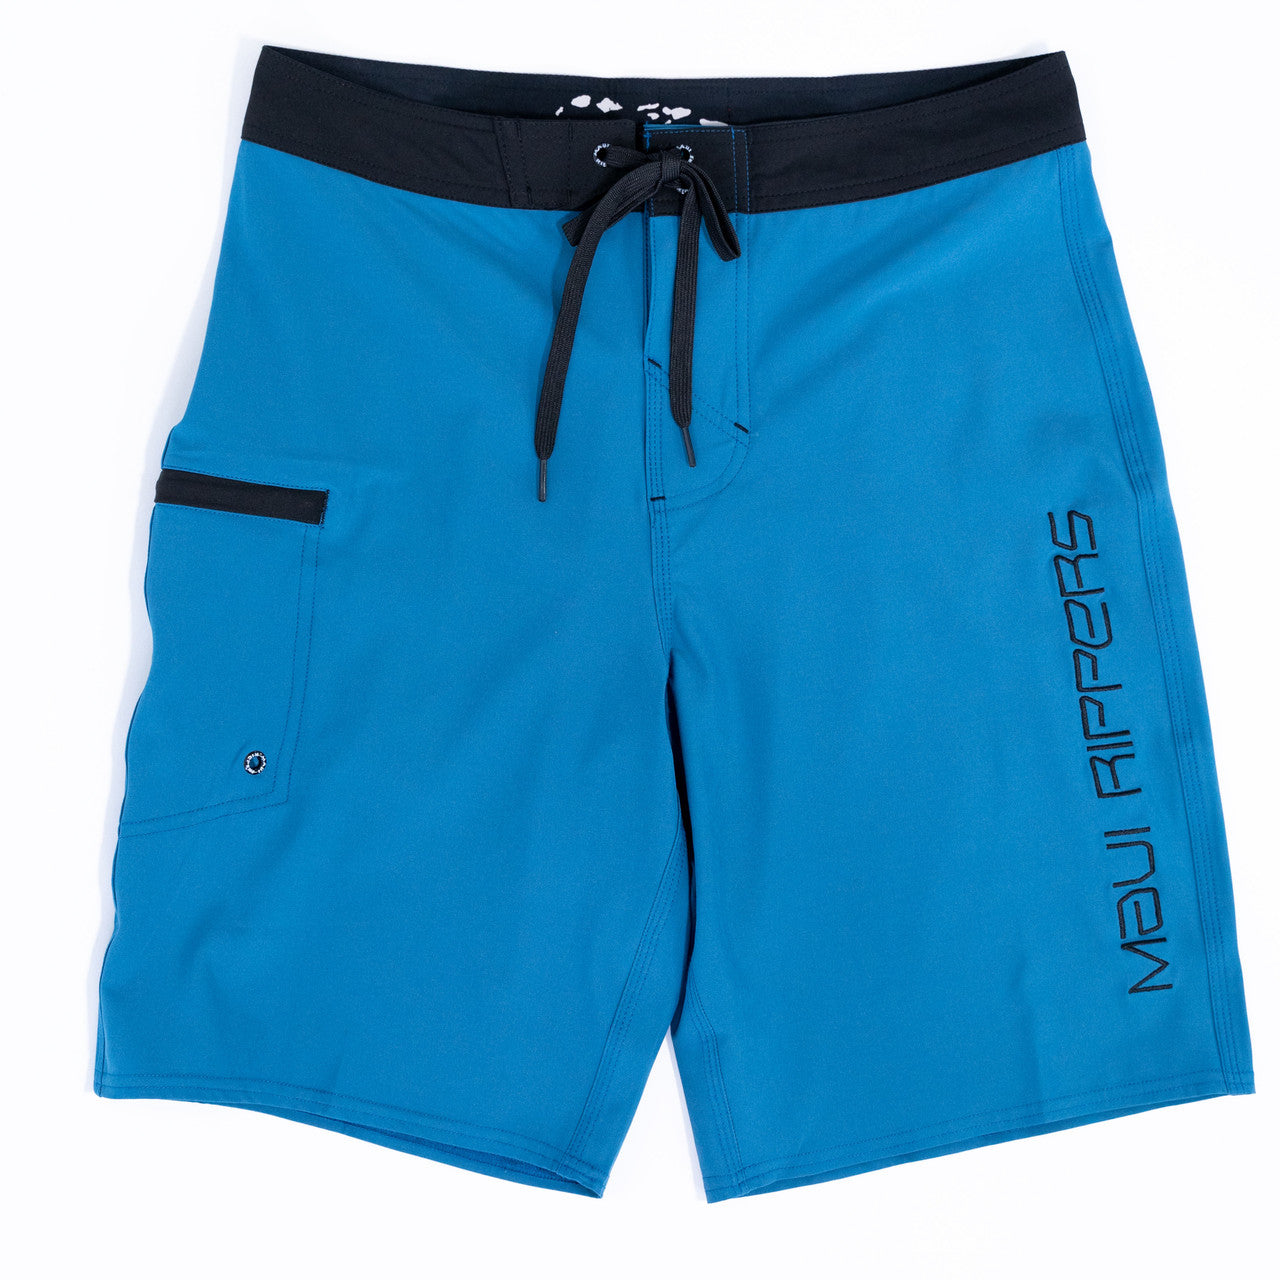 Maui Rippers, Maui Board Shorts, Men's Designer Swimwear